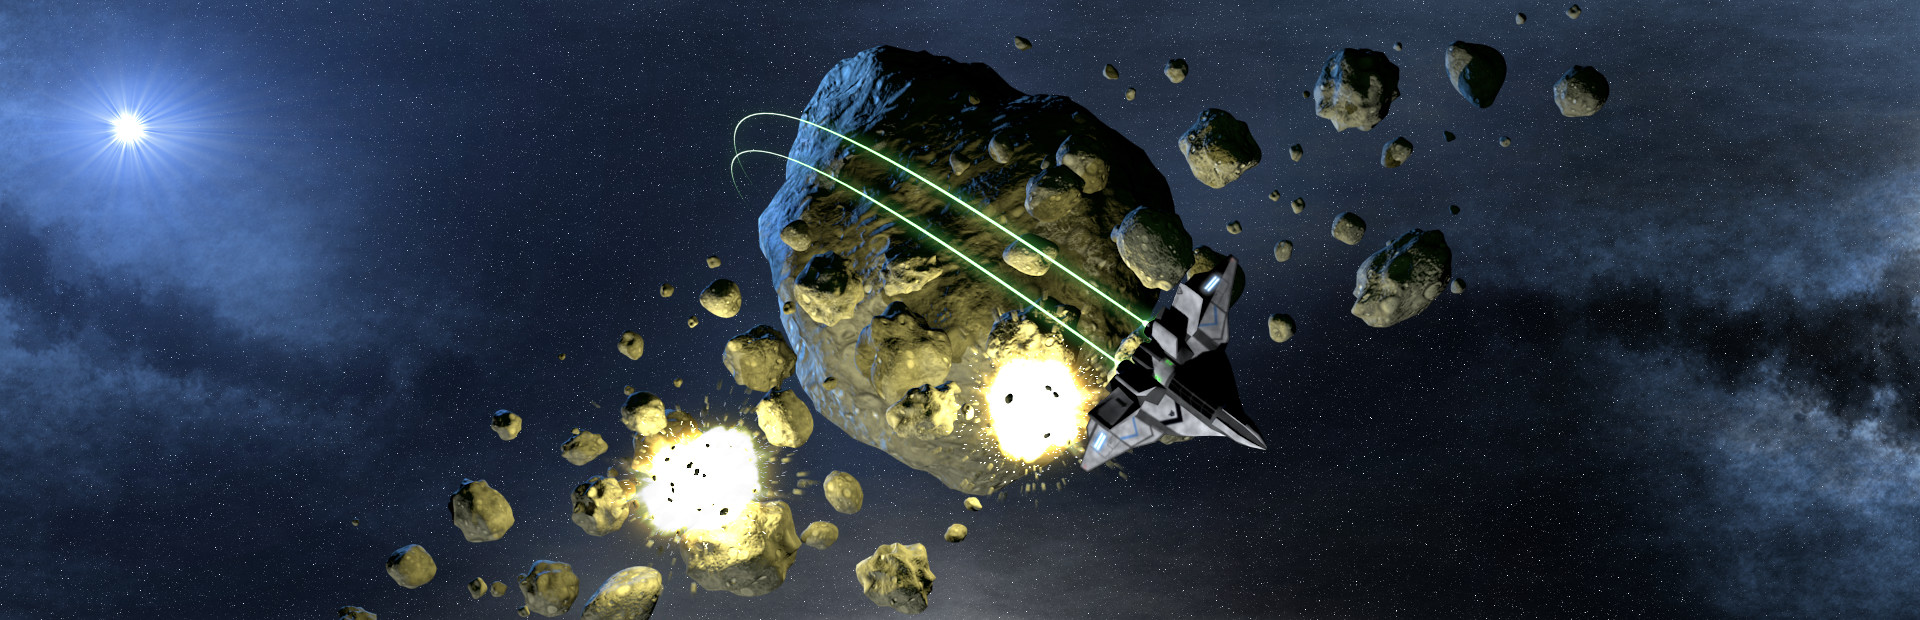 Asteroids Millennium cover image